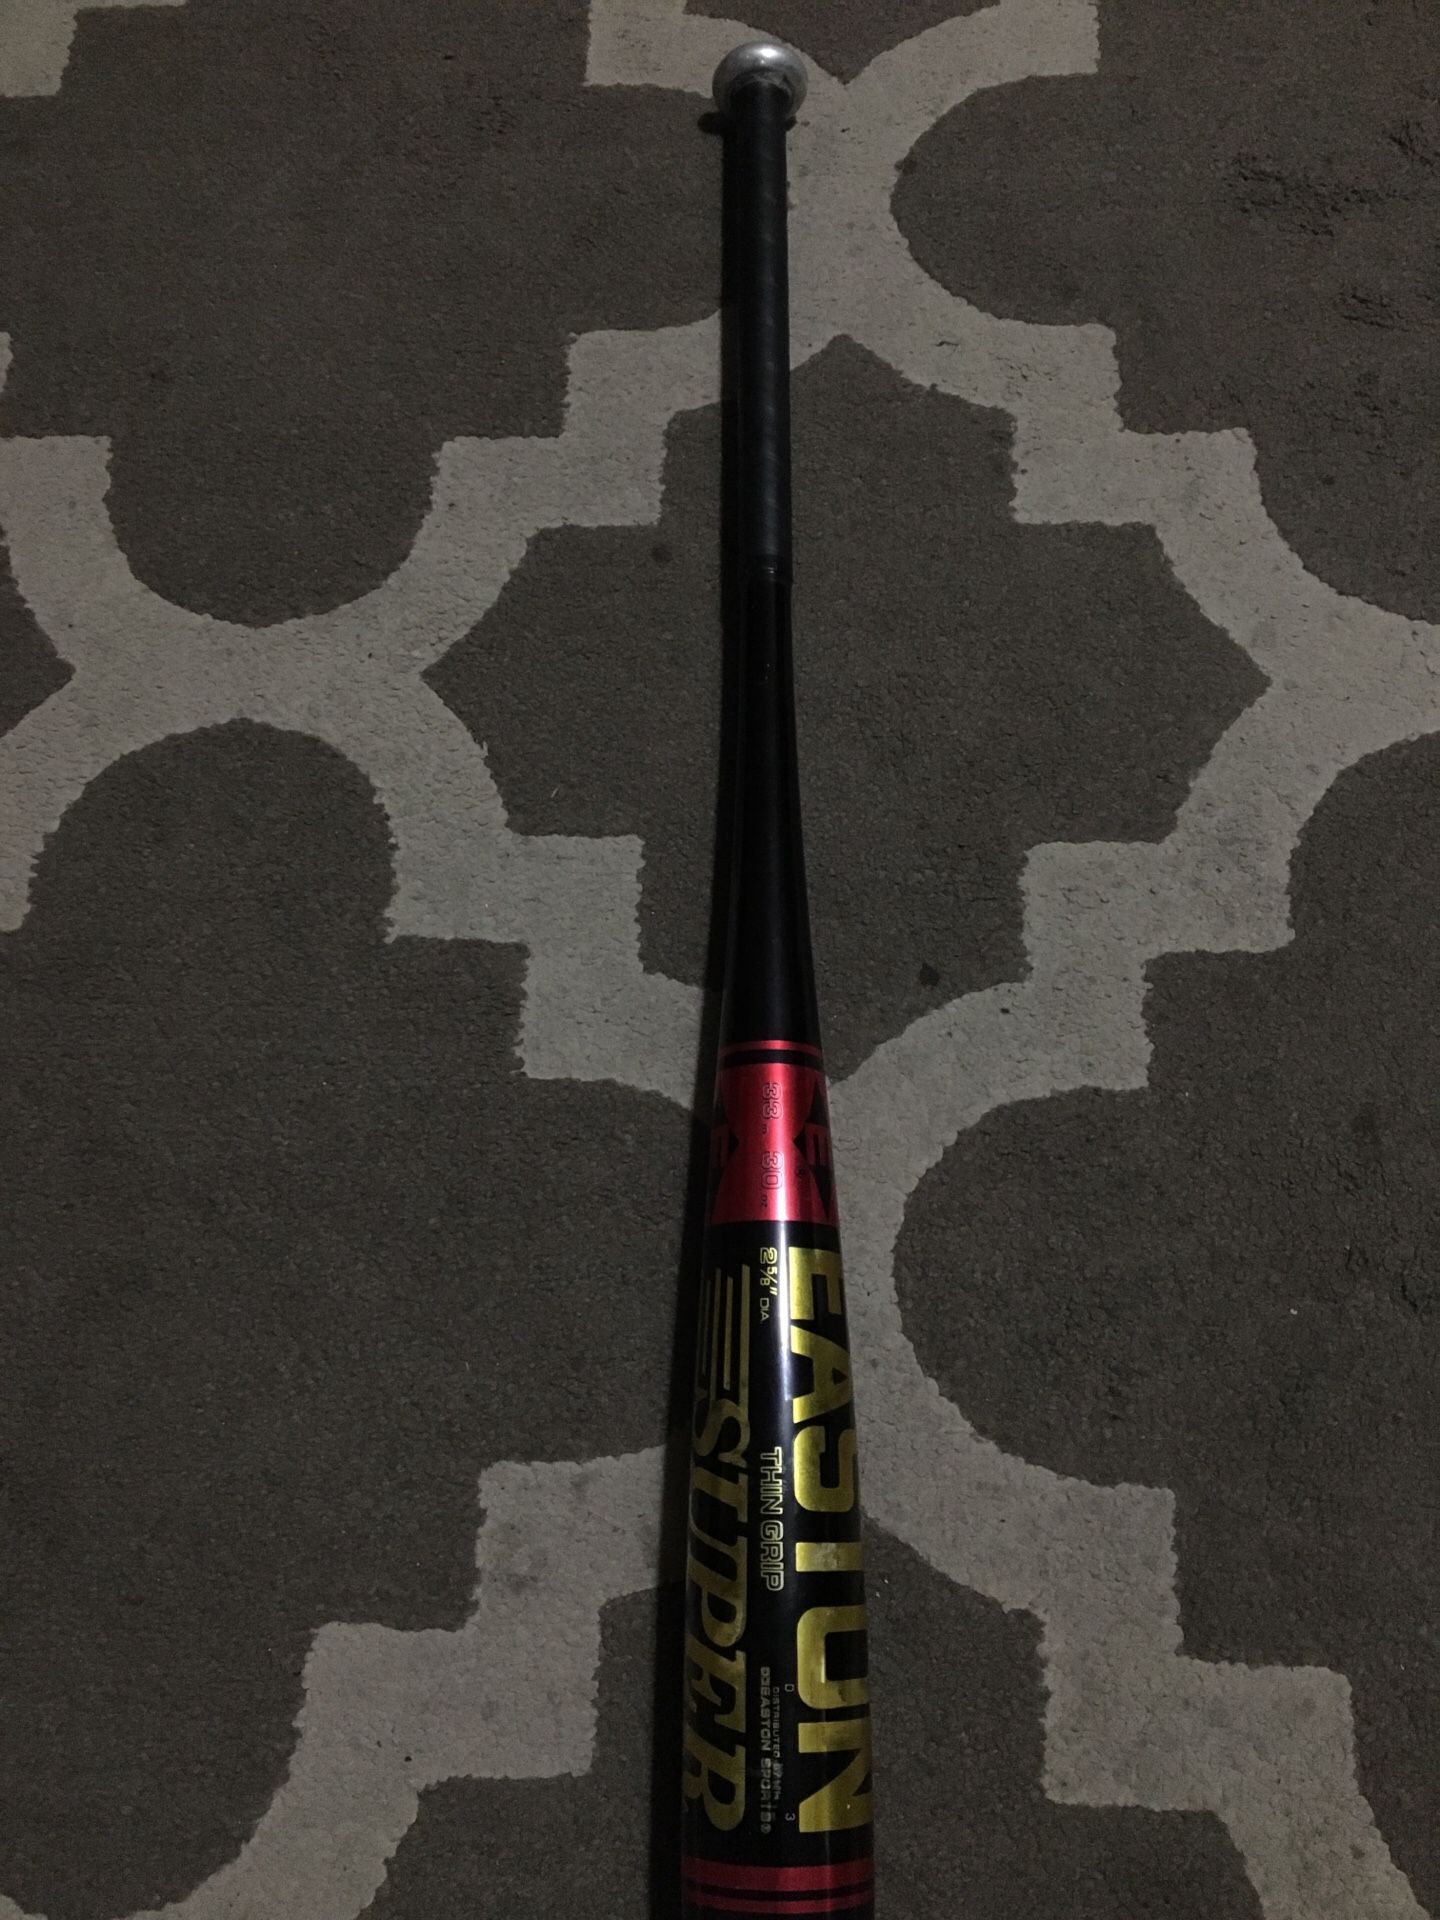 Easton Super Magnum baseball bat size 33”, 30oz, thin grip